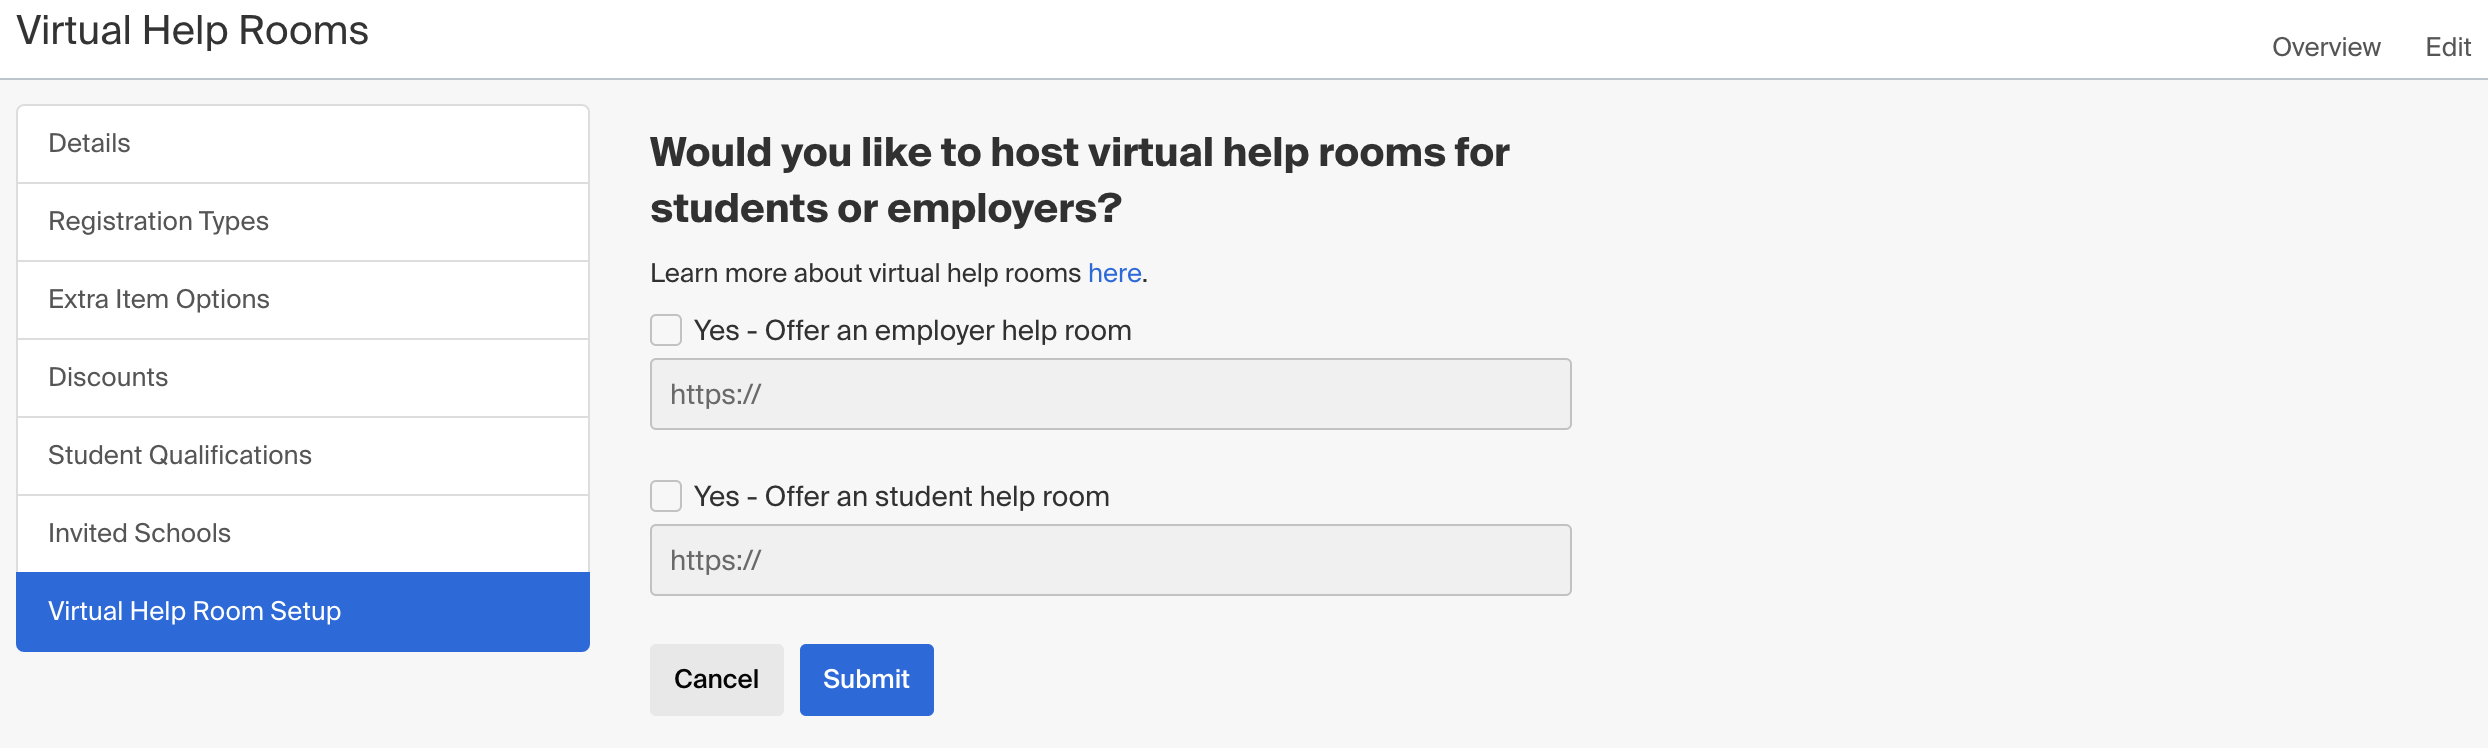 virtual_help_room_setup.png